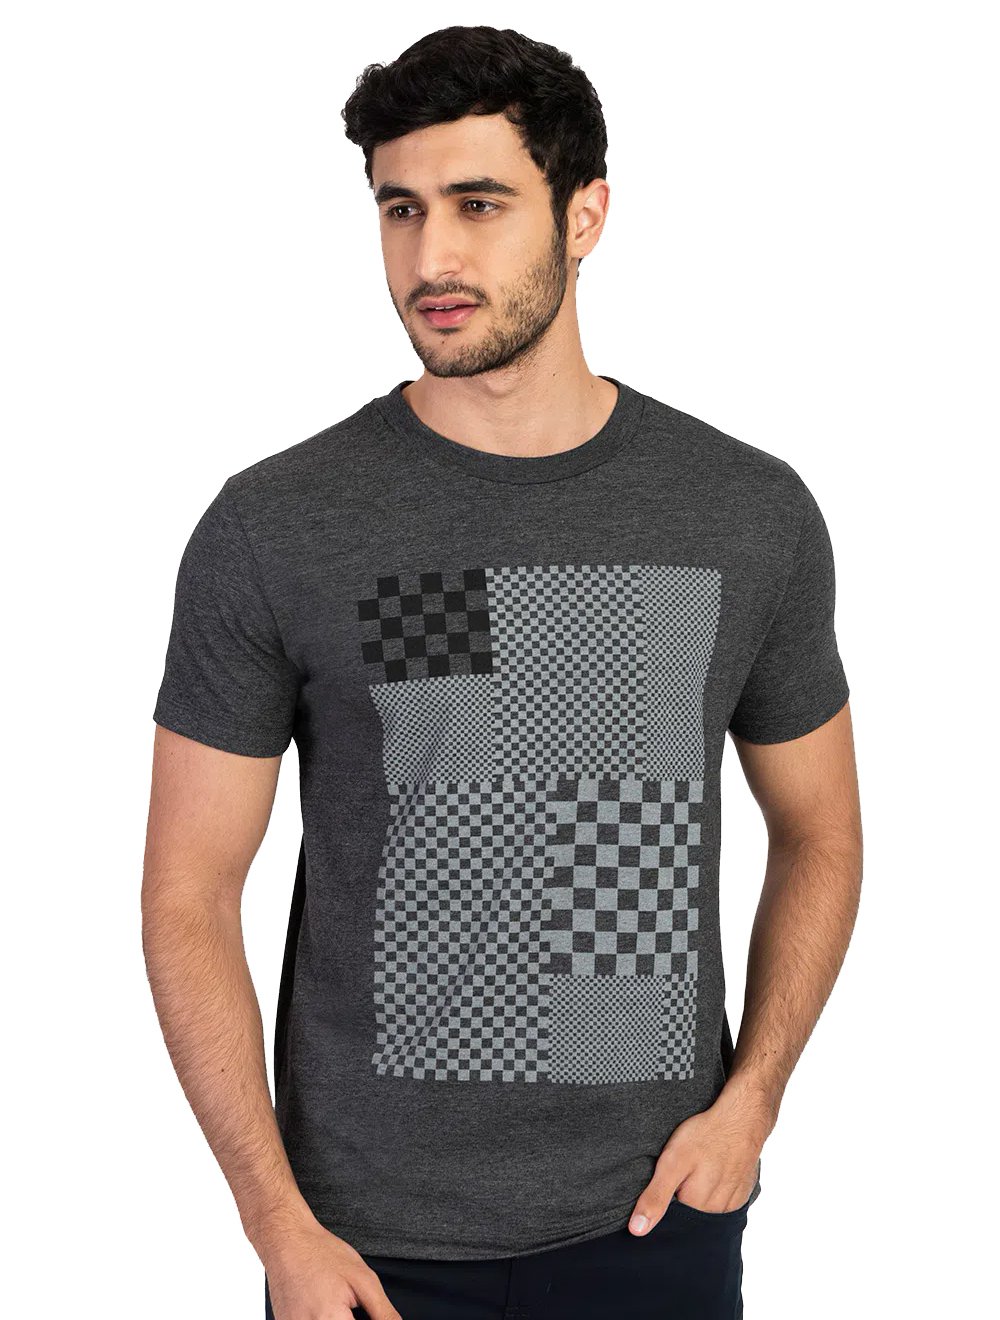 Camiseta Aramis Masculina Regular Chess Grafite Mescla